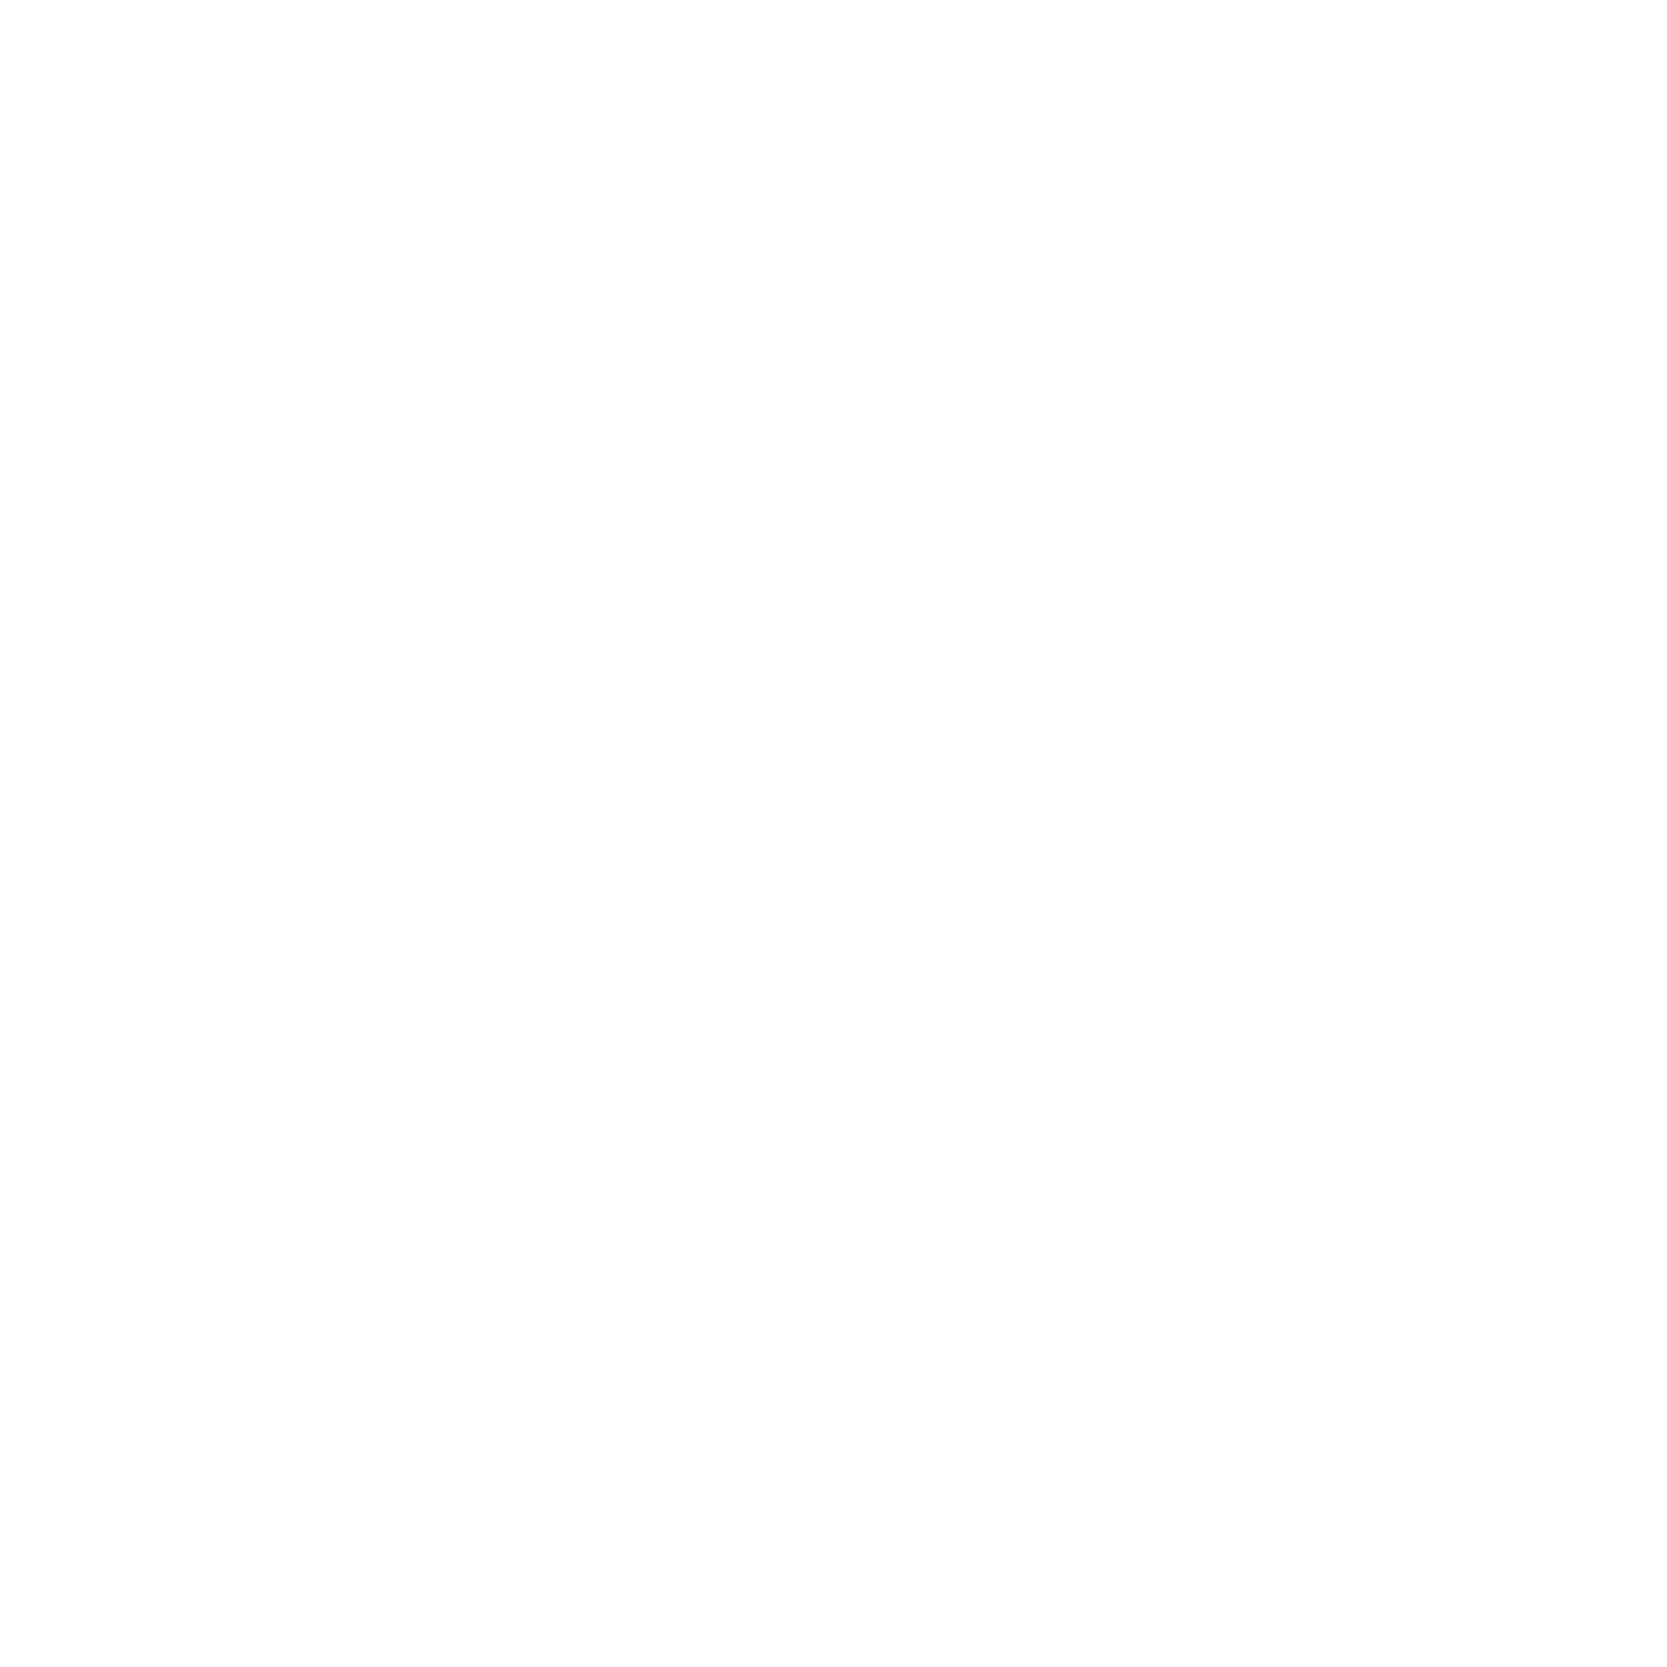 The Iris 